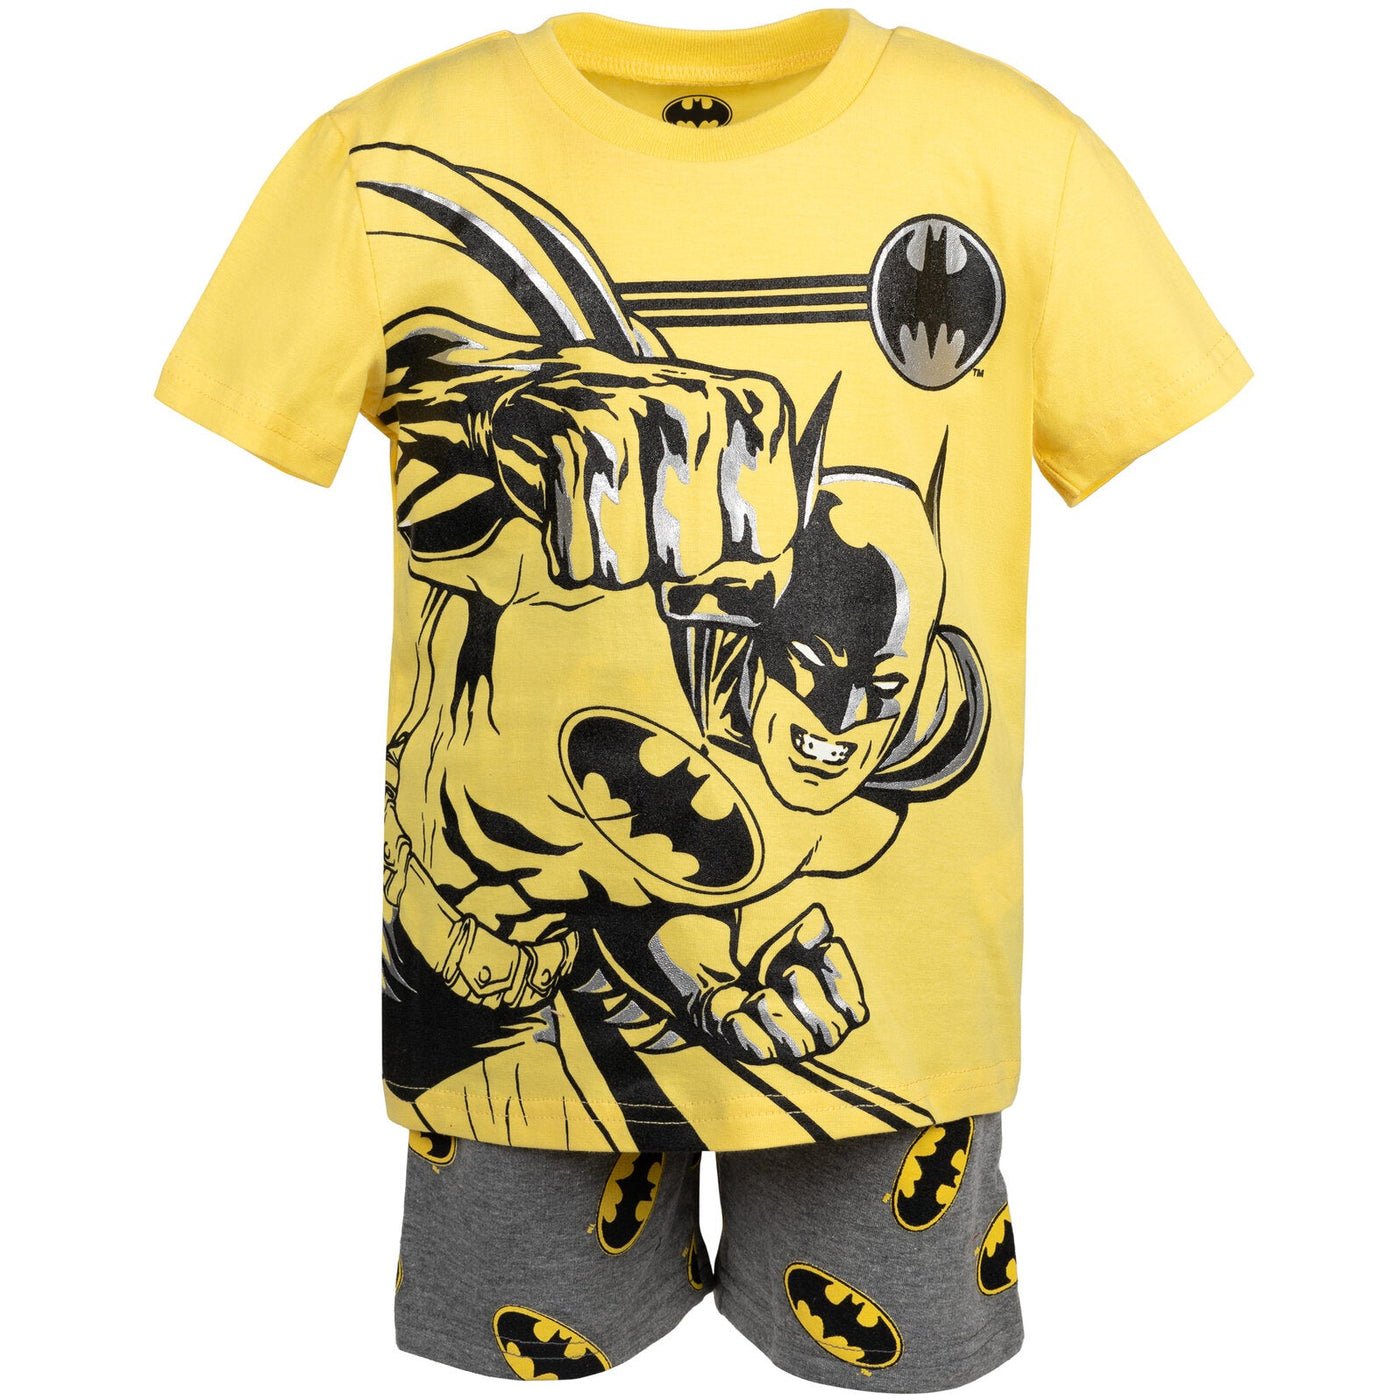 DC Comics Justice League Batman T-Shirt and French Terry Shorts Outfit Set - imagikids